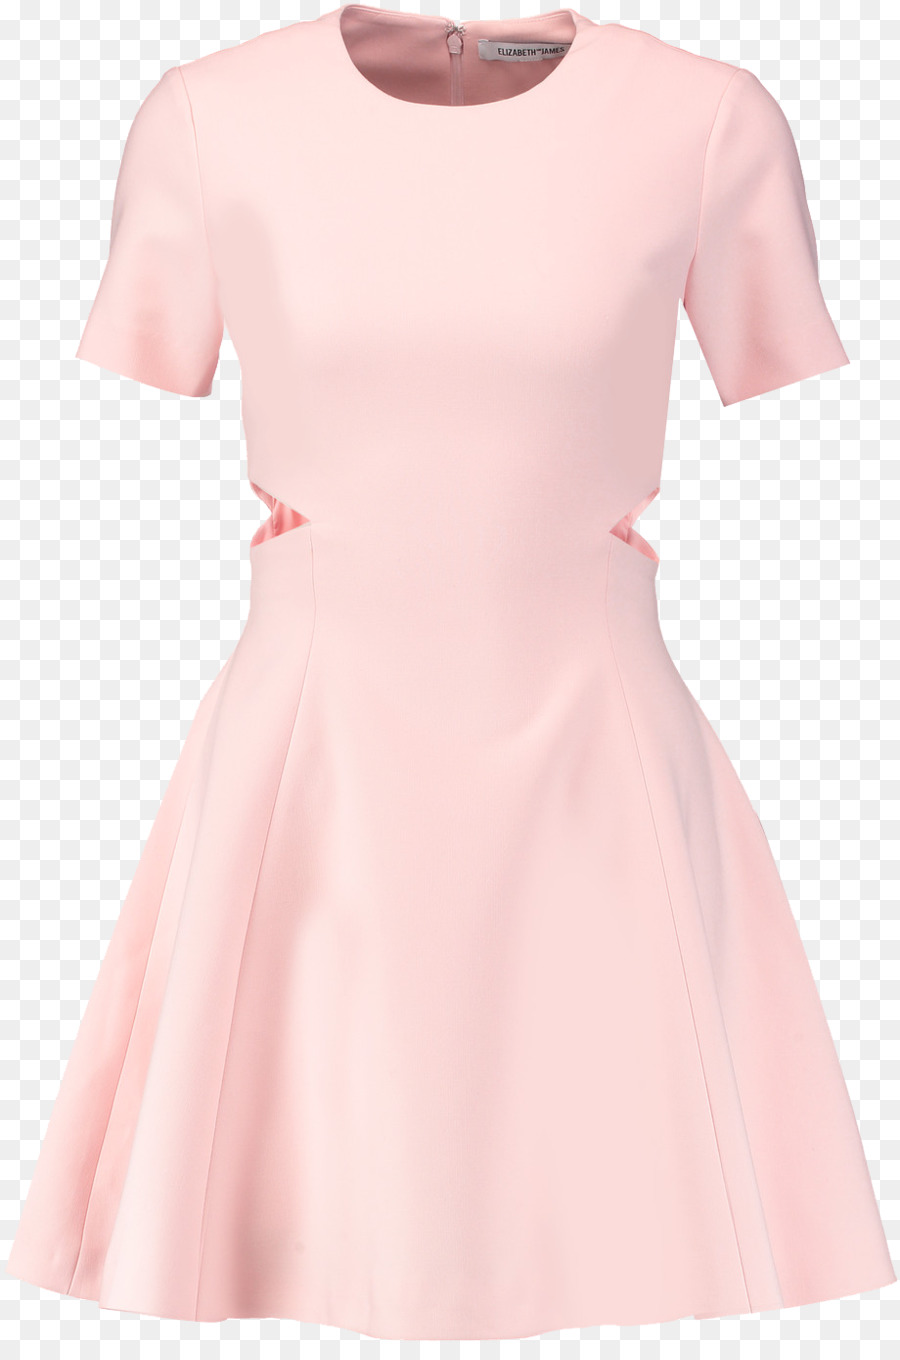 Cocktail dress Pink - Cute pink dress png download - 920*1380 - Free Transparent Dress png Download.